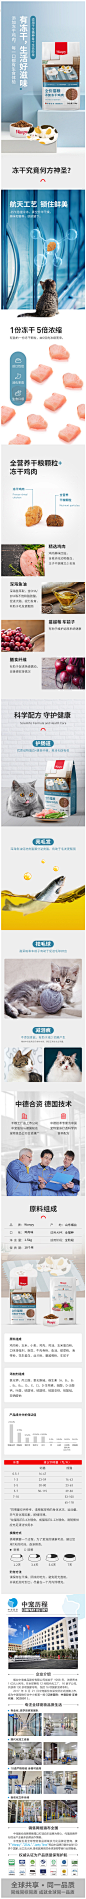 wanpy顽皮猫粮添加冻干鸡肉全期猫粮通用型1.5kg成猫蓝猫英短美短-tmall.com天猫